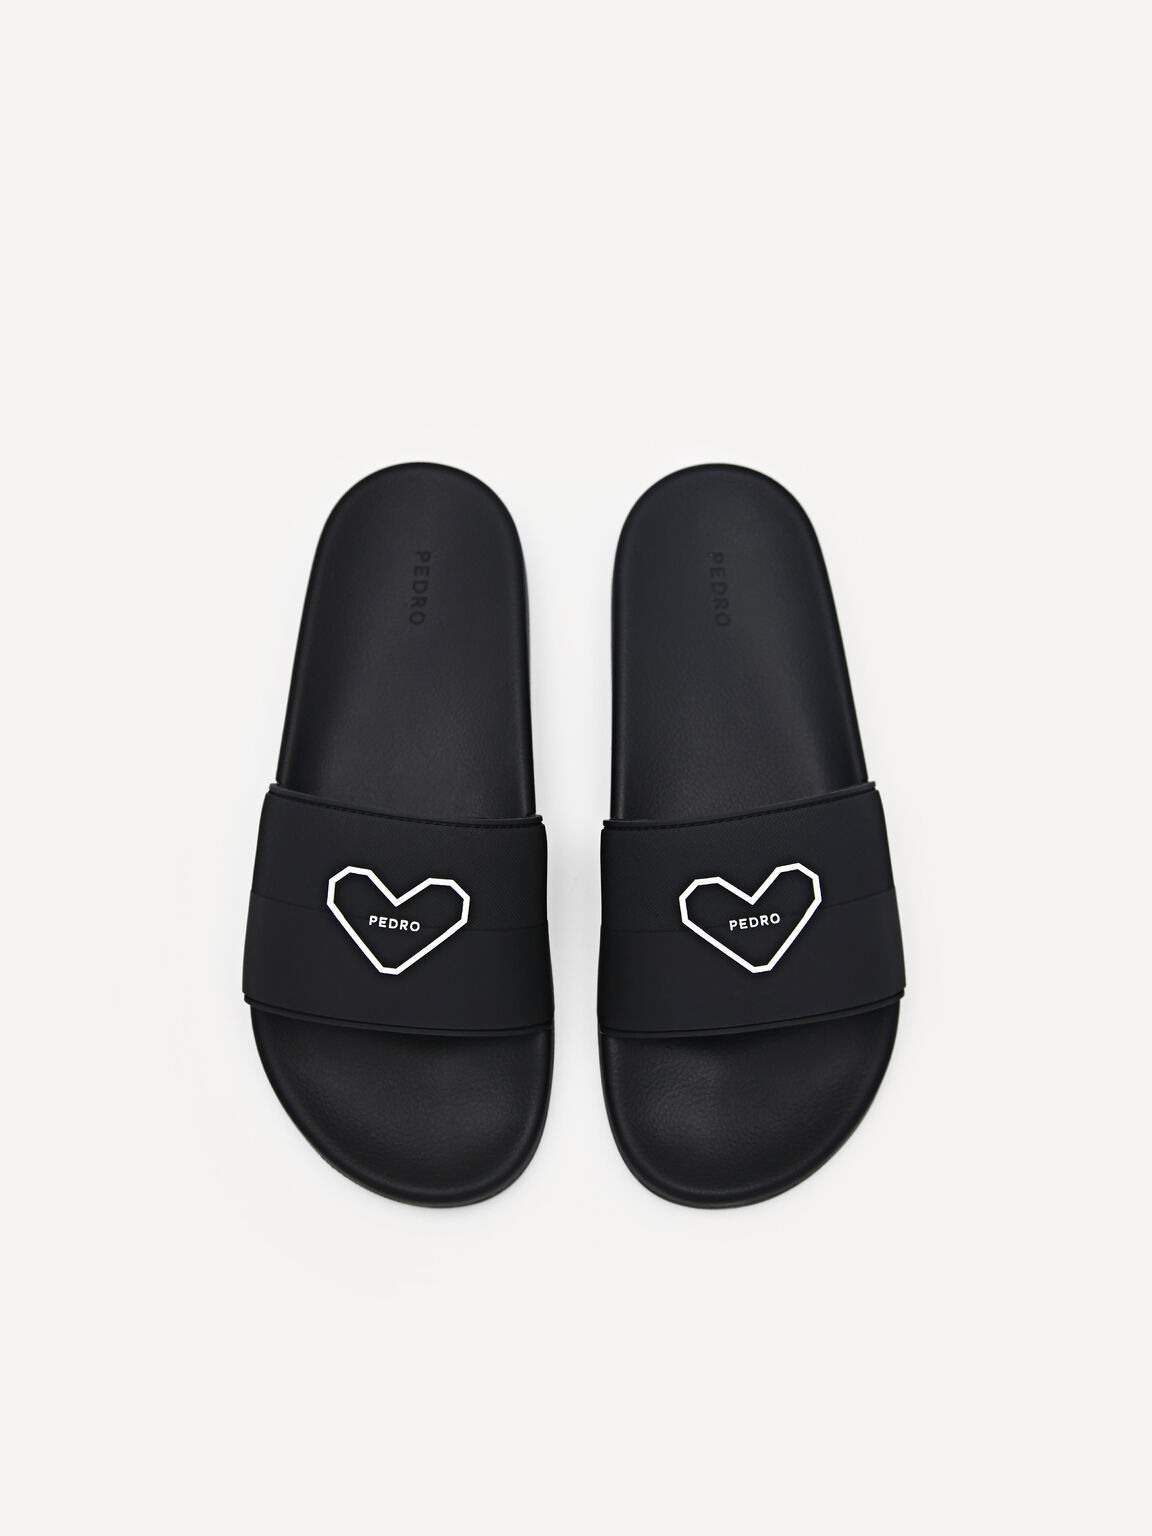 Eterna Slide Sandals, Black